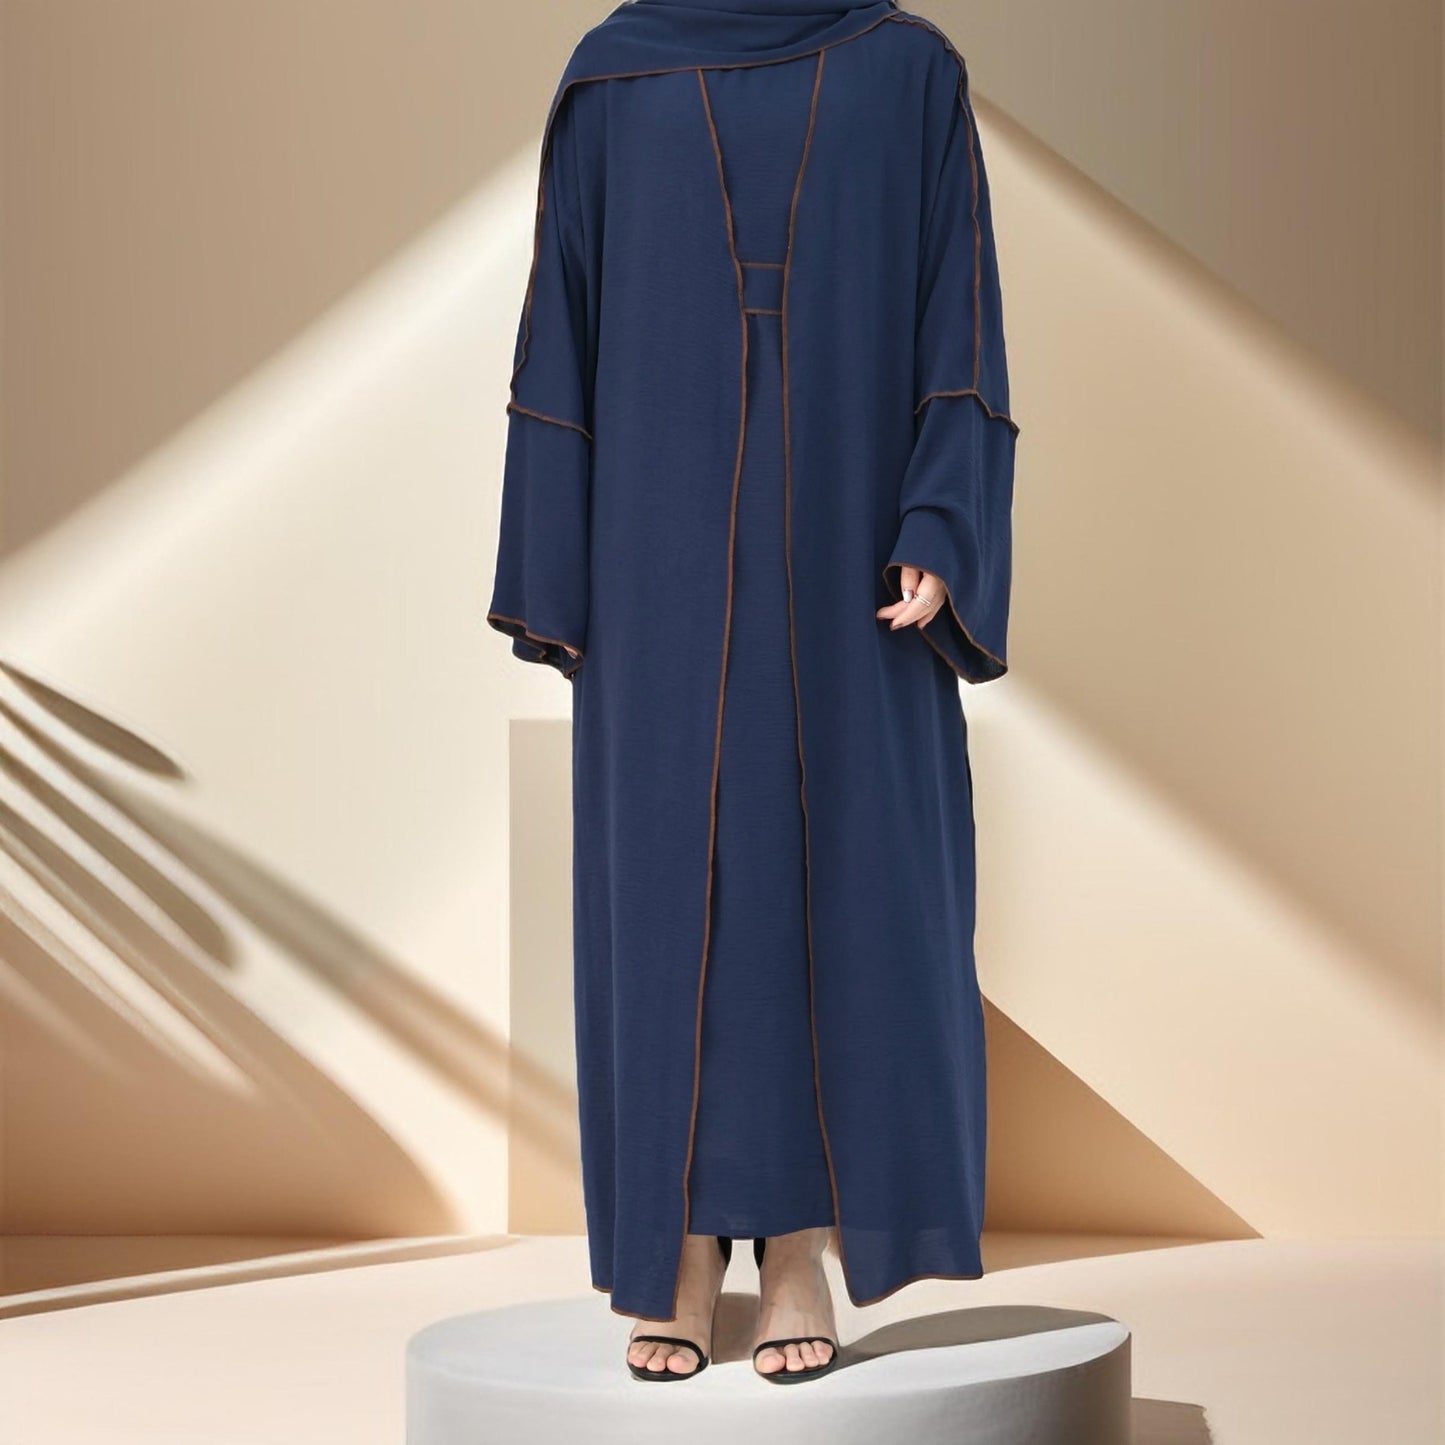 Raha four piece abaya set - Try Modest Limited 